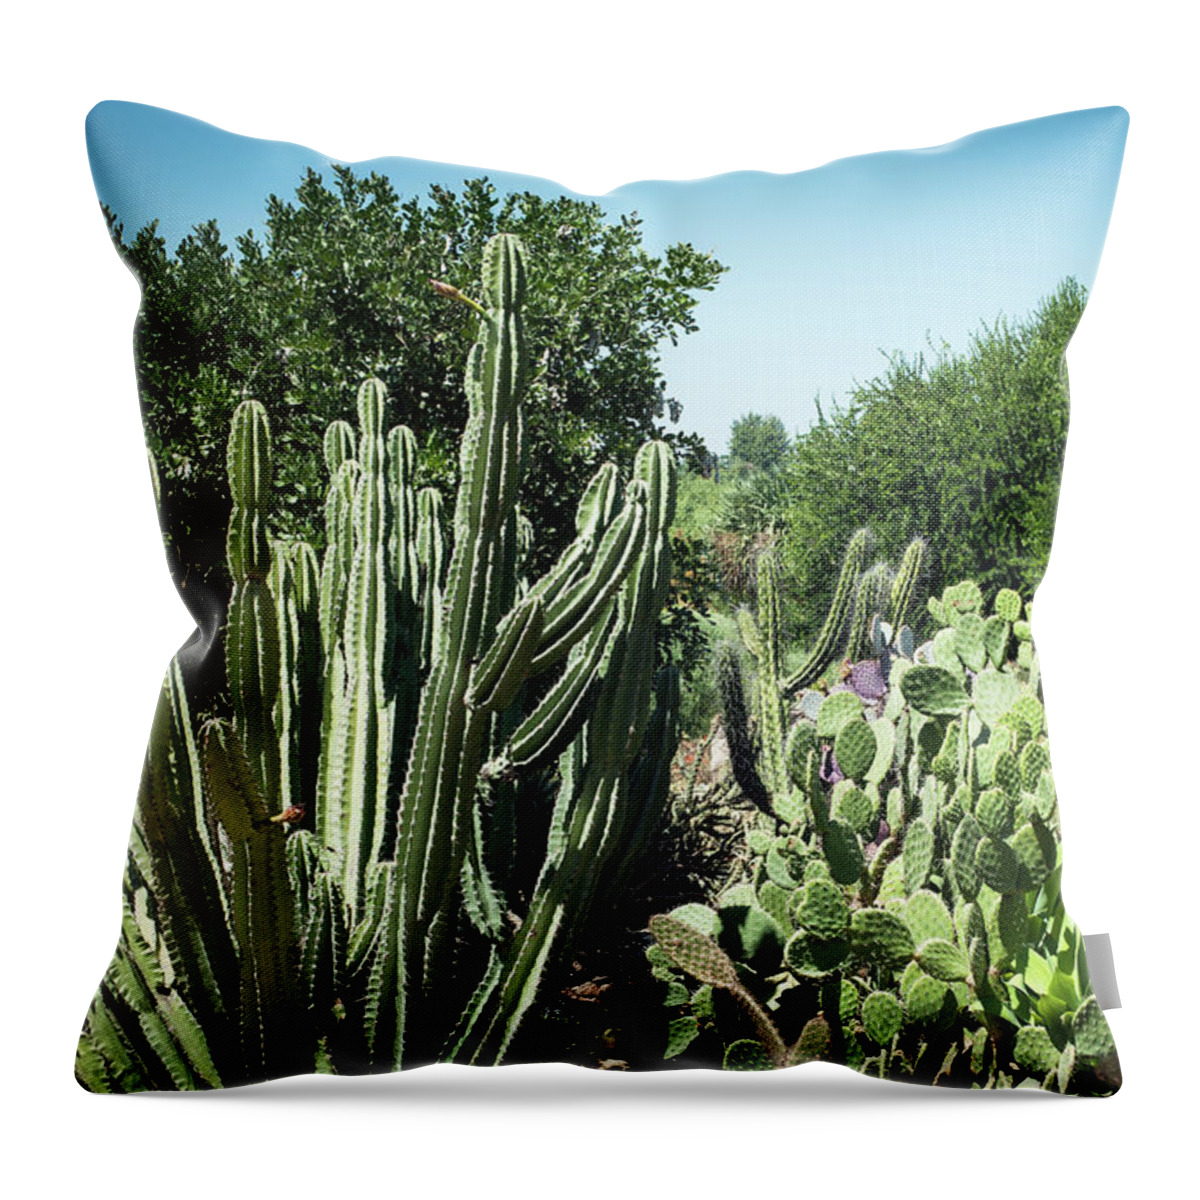 Desert Throw Pillow featuring the photograph Desert Garden by Catherine Lau